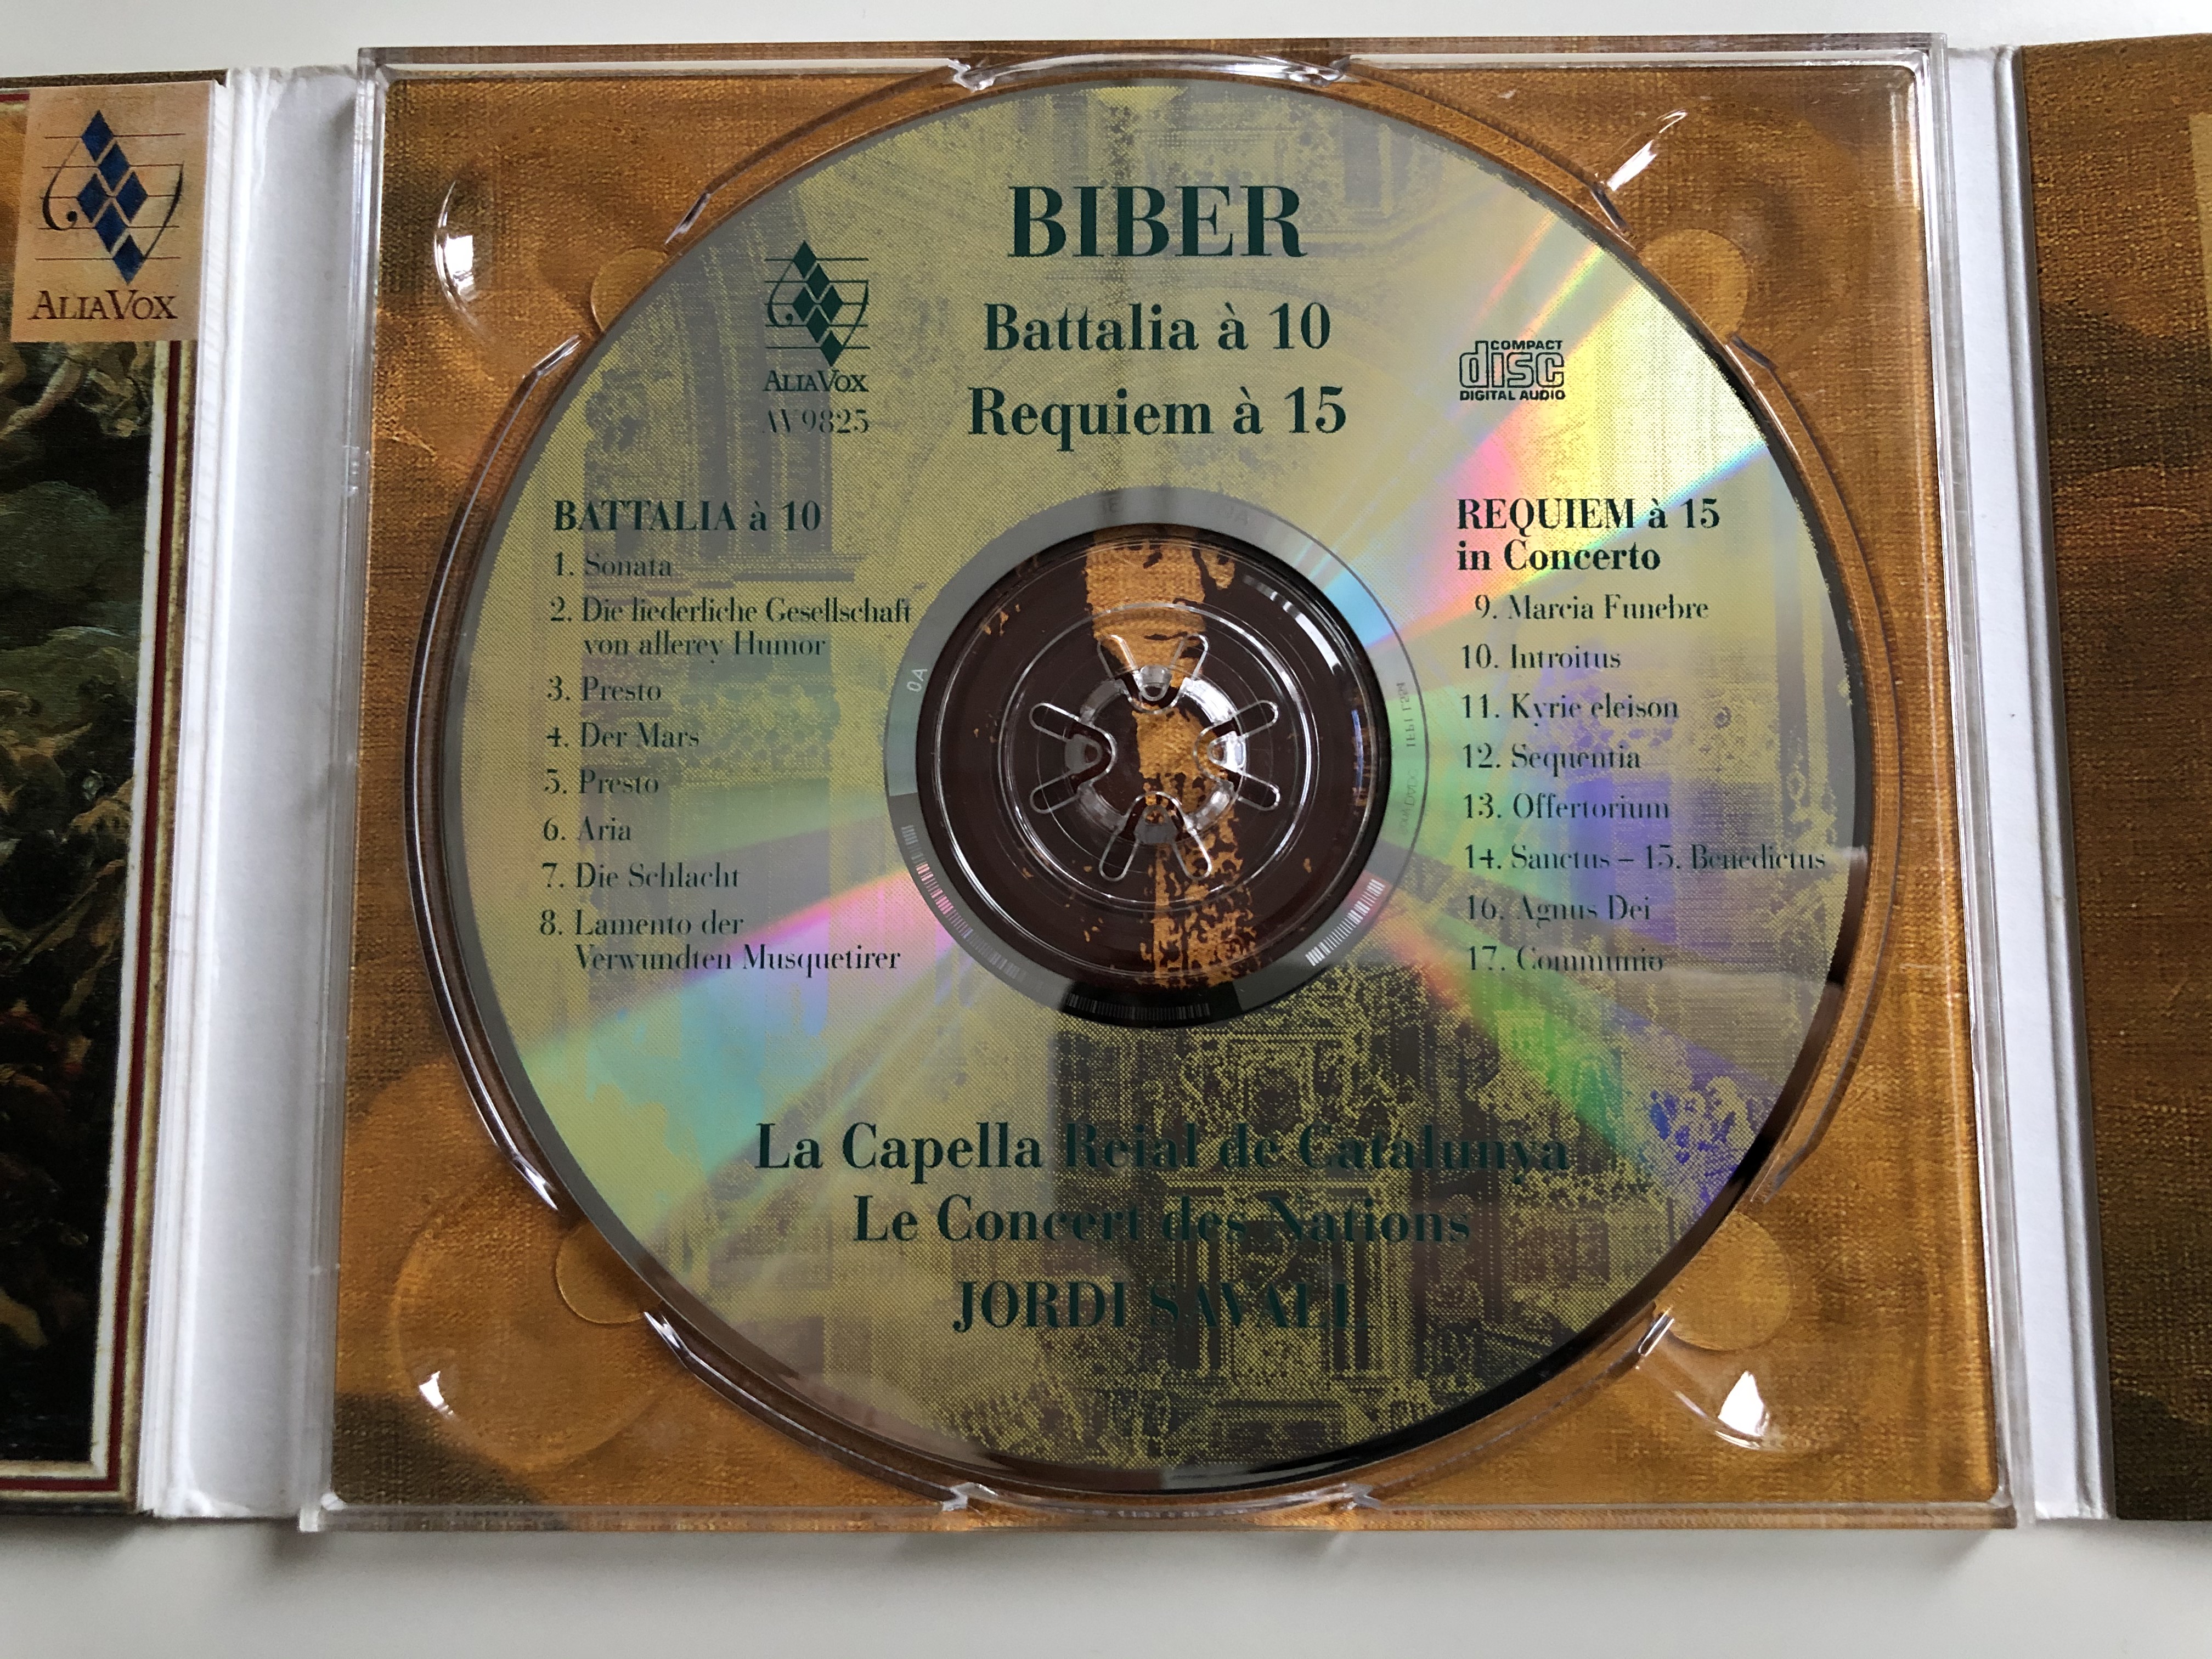 heinrich-ignaz-franz-von-biber-battalia-10-requiem-15-in-concerto-la-capella-reial-de-catalunya-le-concert-des-nations-jordi-savall-alia-vox-audio-cd-2002-av-9825-4-.jpg